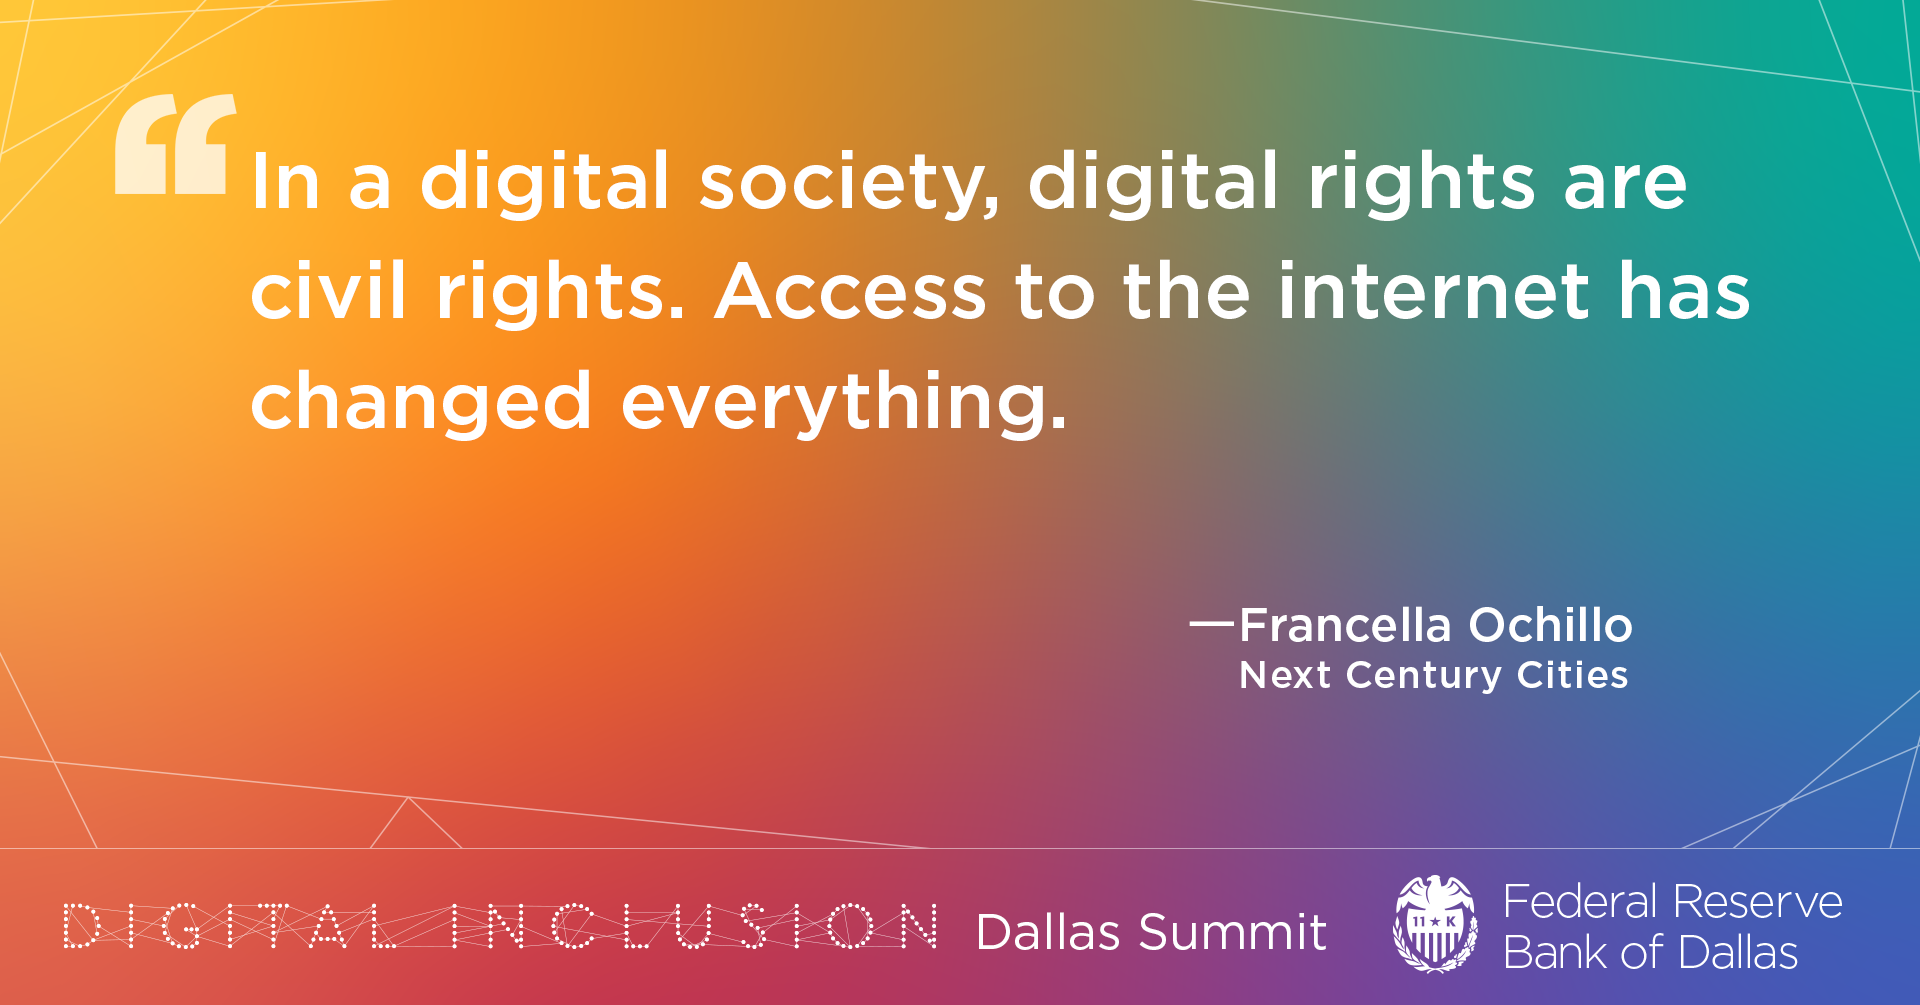 Keynote speaker Francella Ochillo emphasized the critical need for digital equity